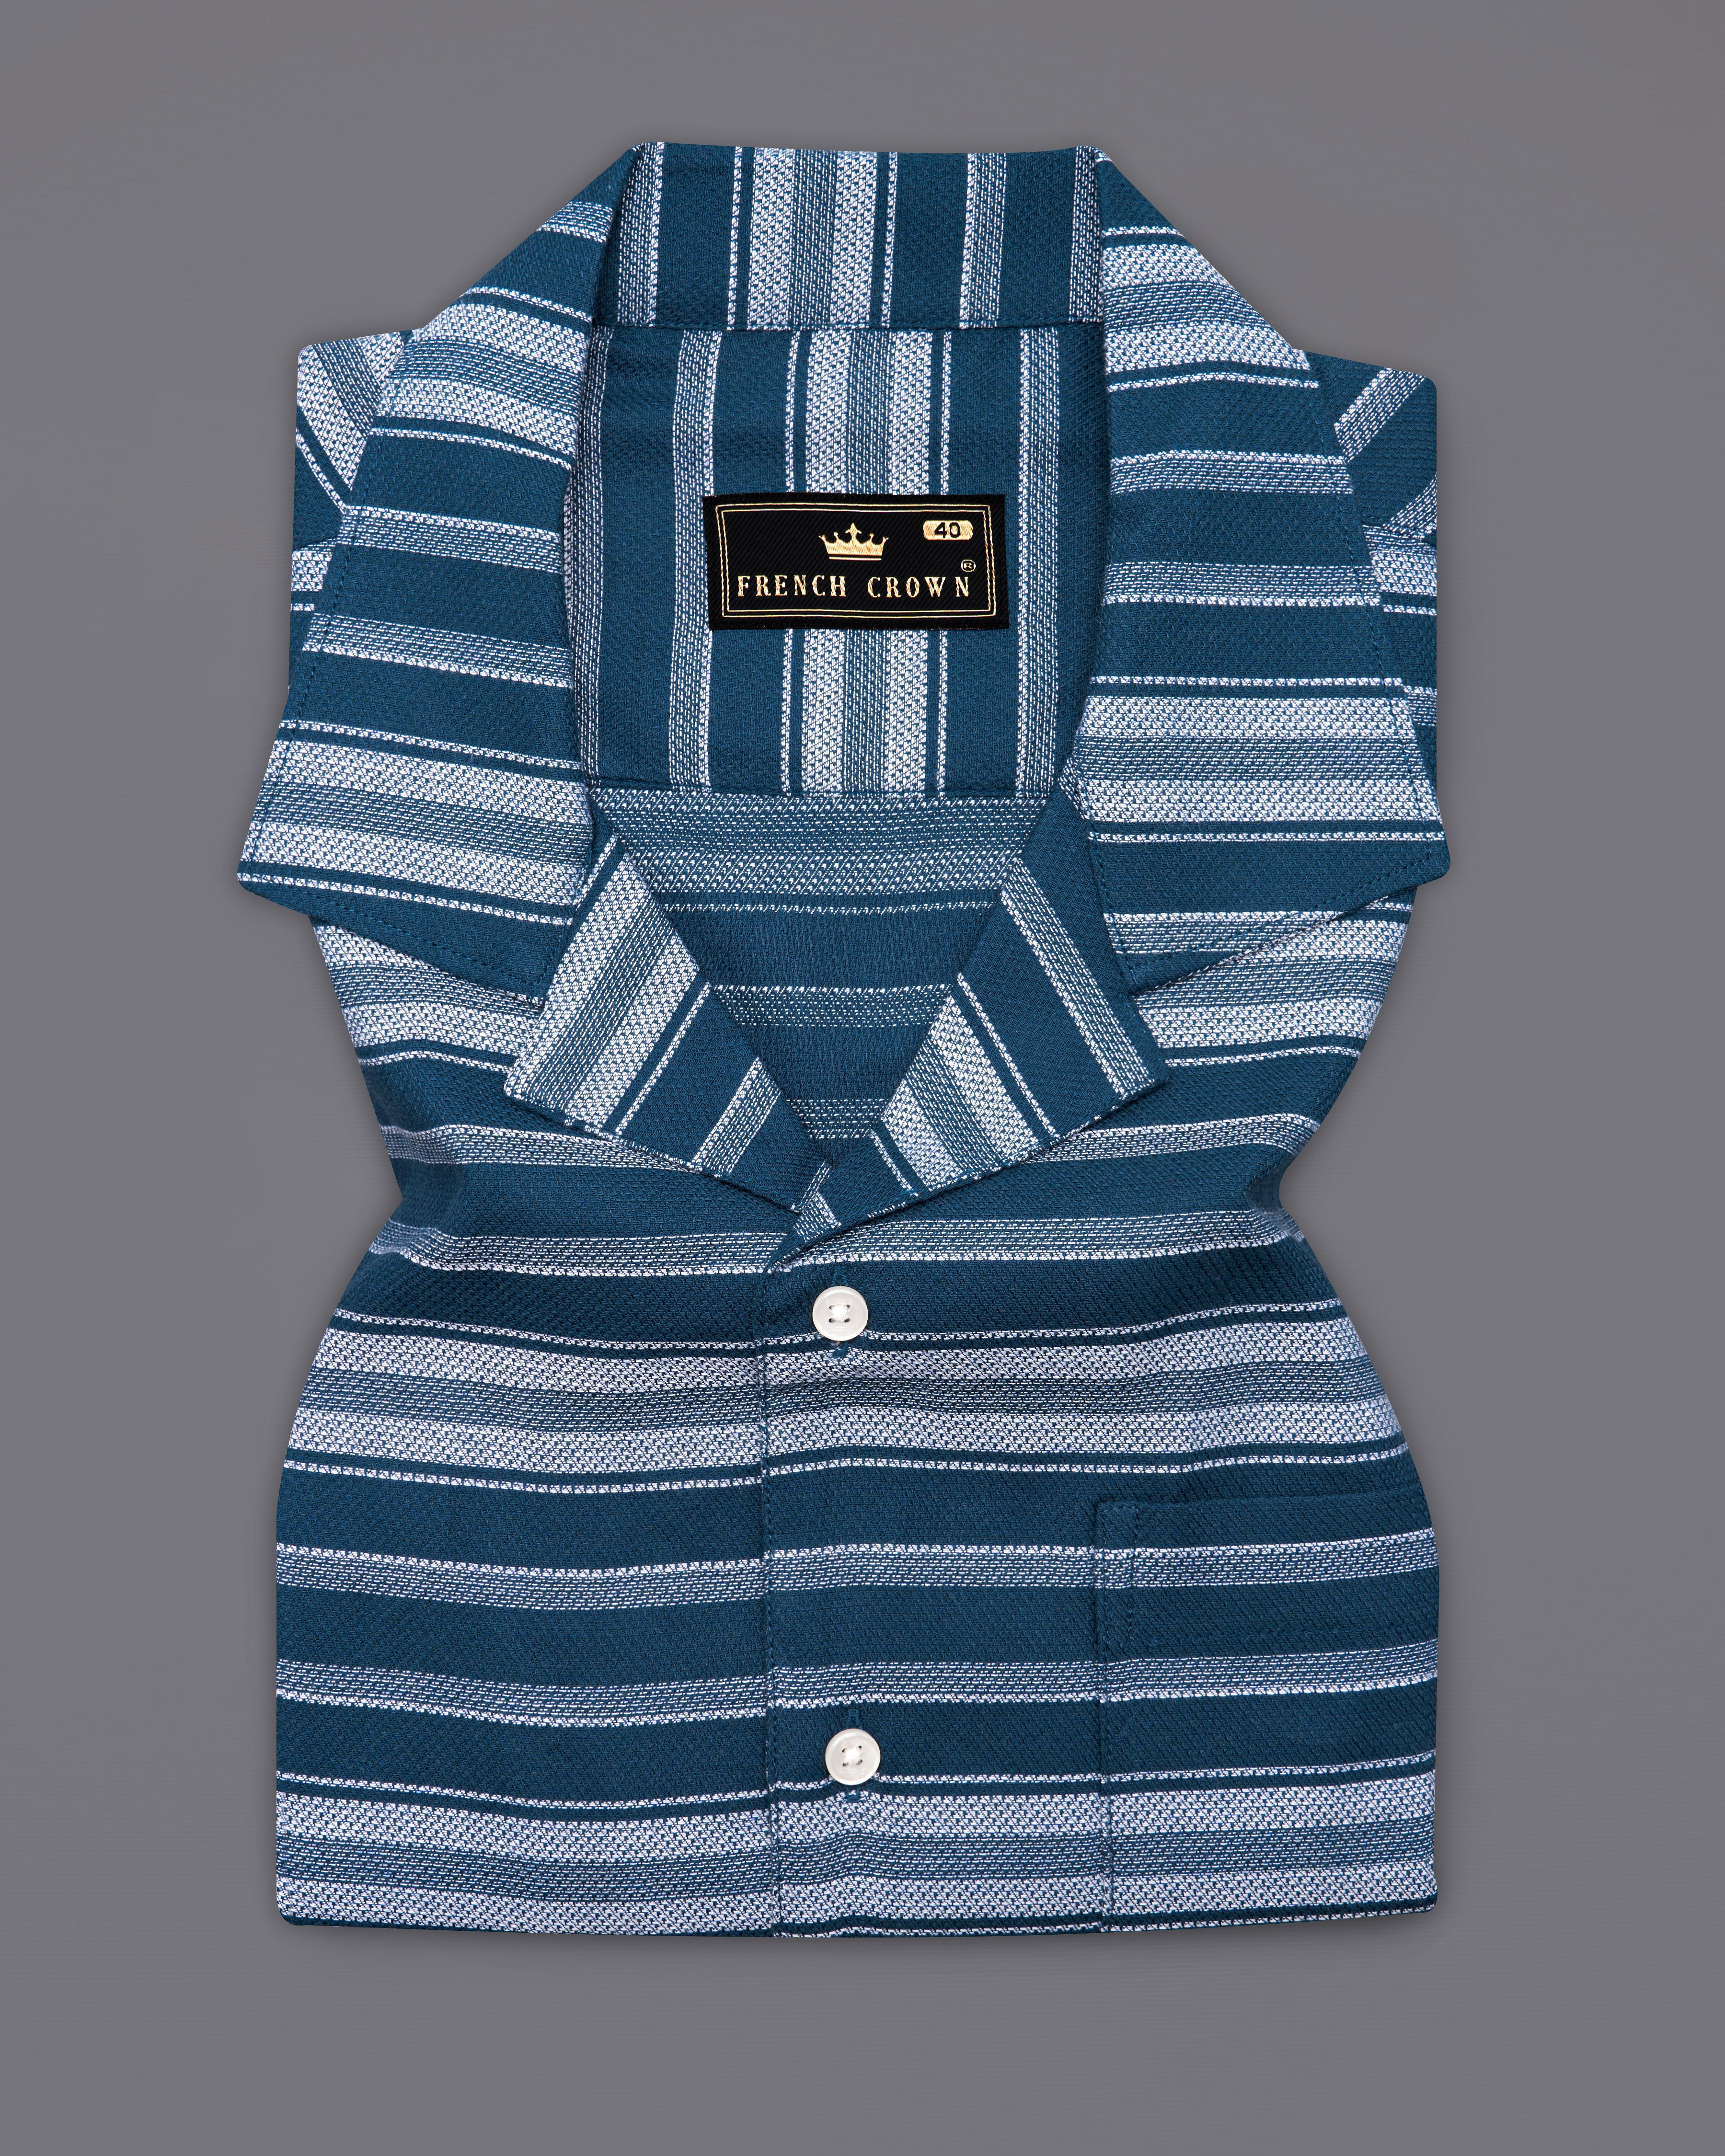 Zodiac Blue Multicolour Striped Dobby Textured Half-Sleeved Shirt 9668-CC-SS-38, 9668-CC-SS-39, 9668-CC-SS-40, 9668-CC-SS-42, 9668-CC-SS-44, 9668-CC-SS-46, 9668-CC-SS-48, 9668-CC-SS-50, 9668-CC-SS-52